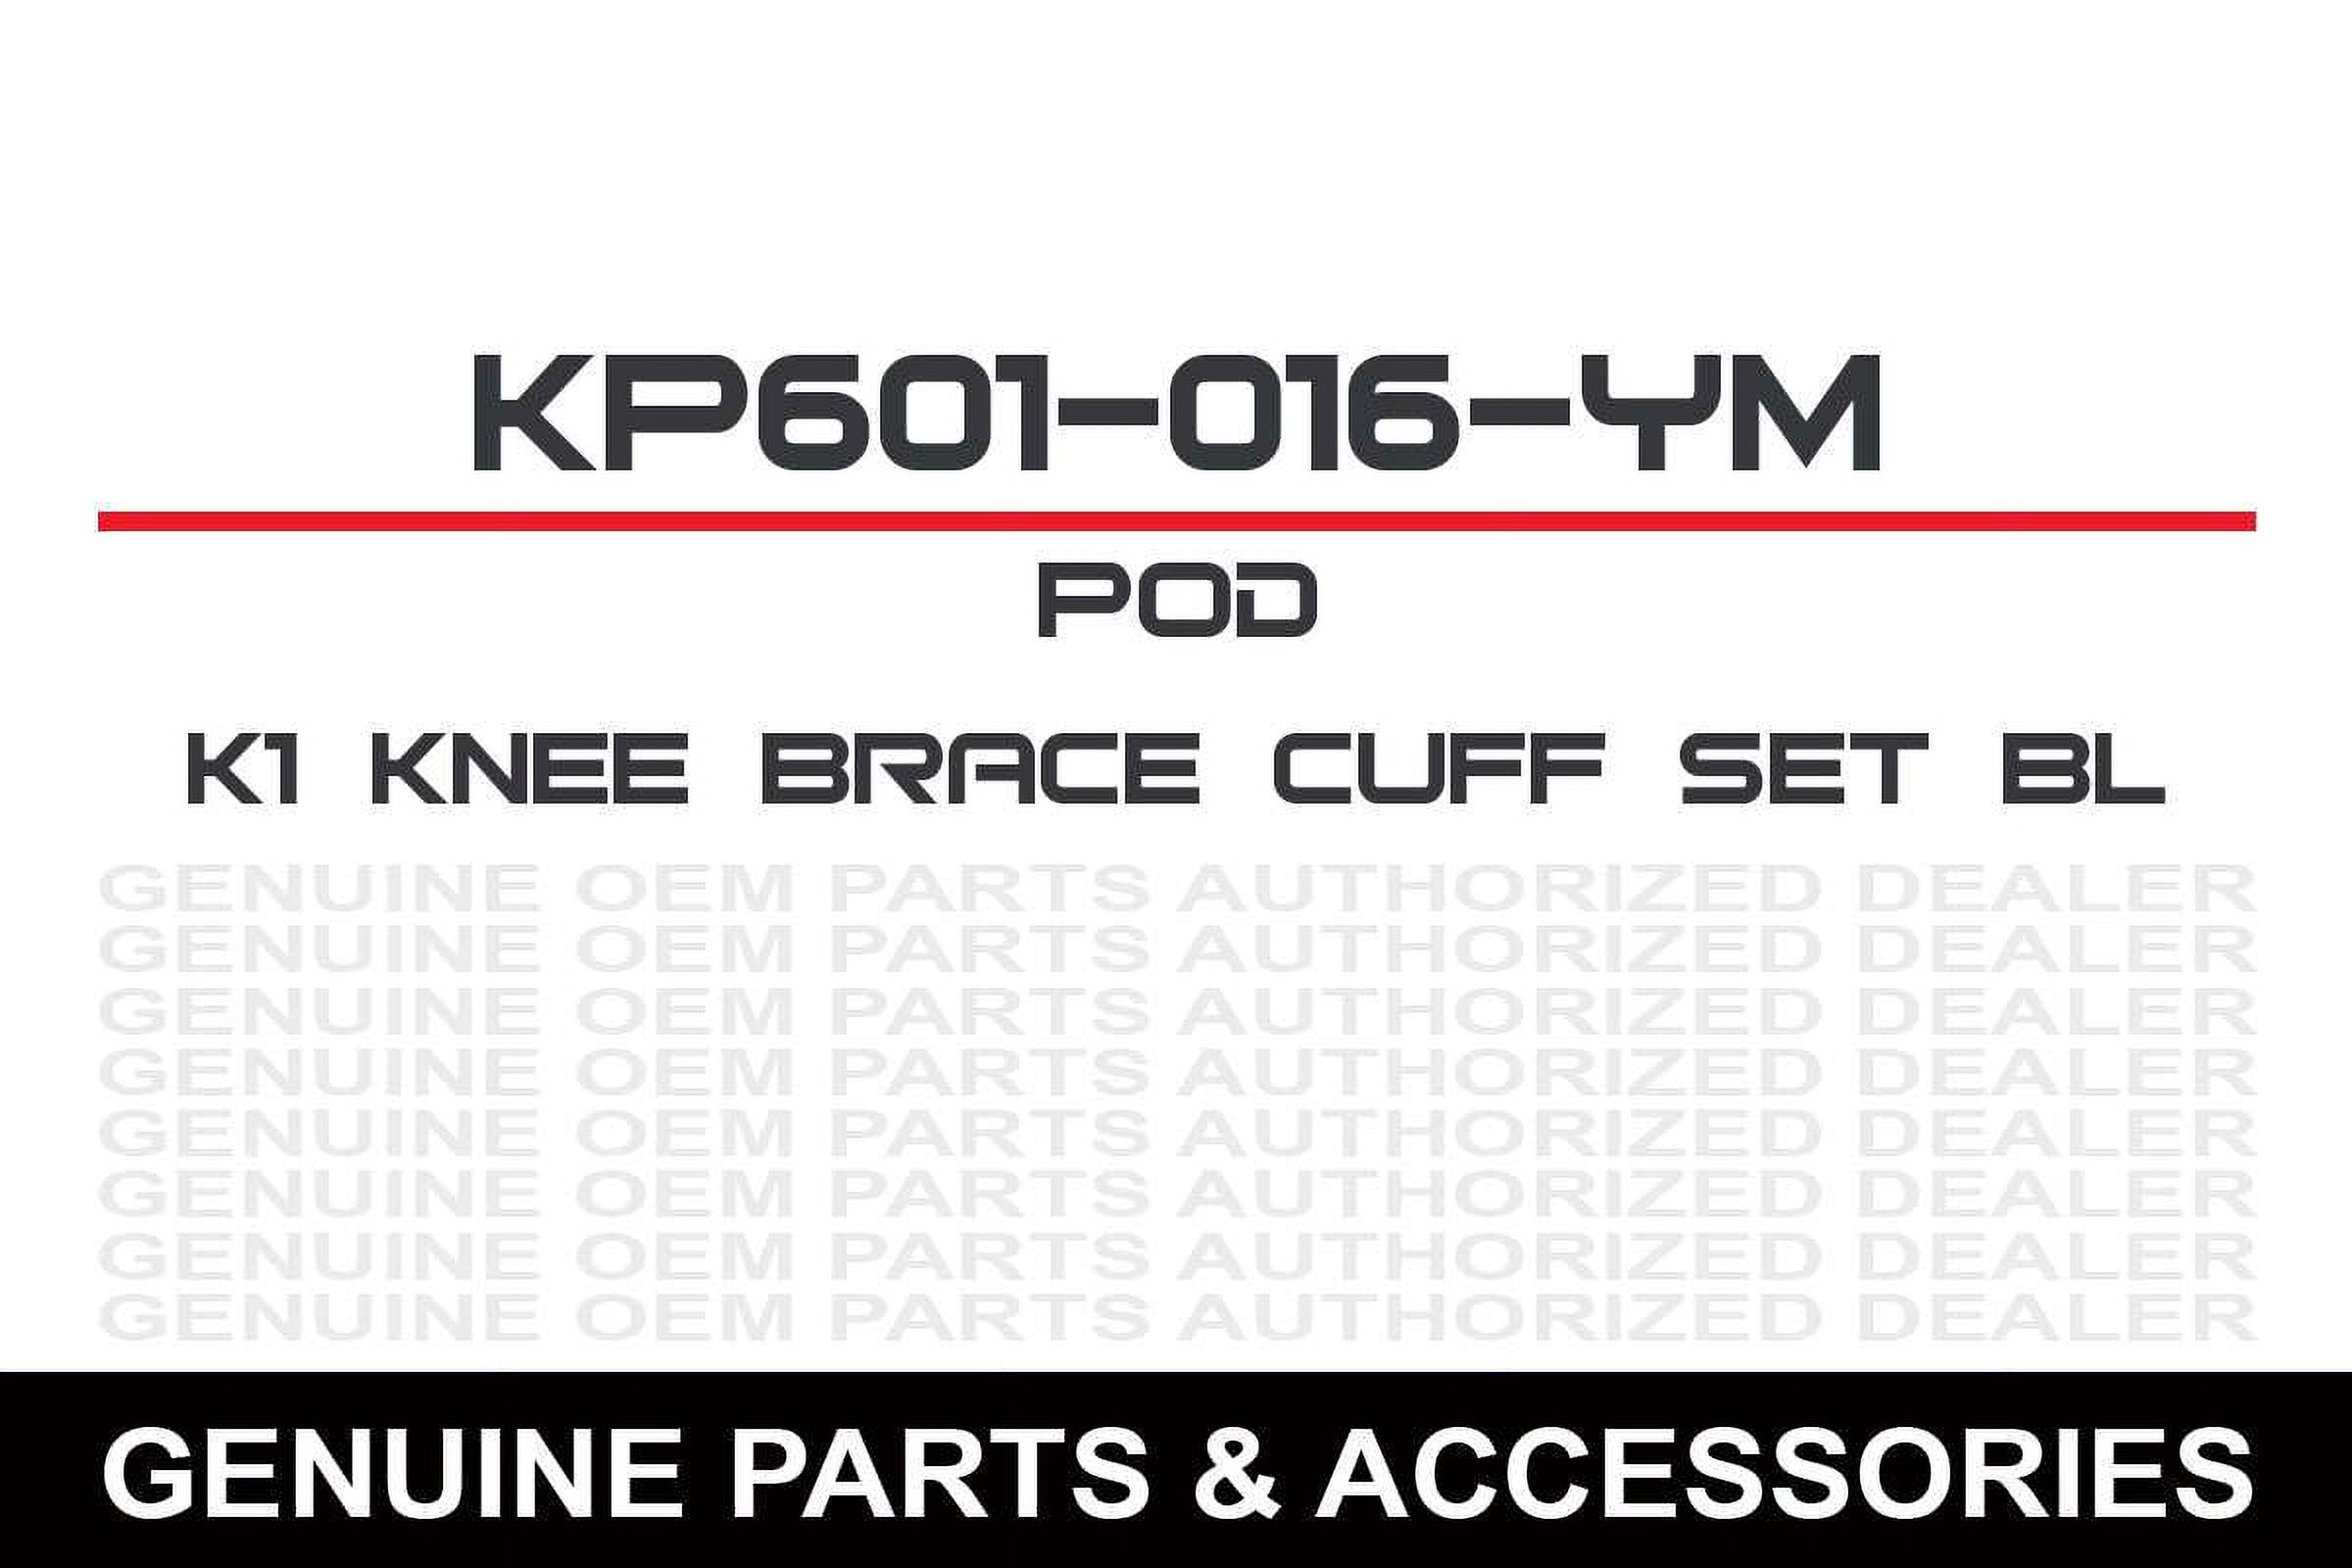 Pod MX K1 Youth Knee Brace Parts Right Black | Orange Replacement Hardware Cuff Set - image 2 of 2